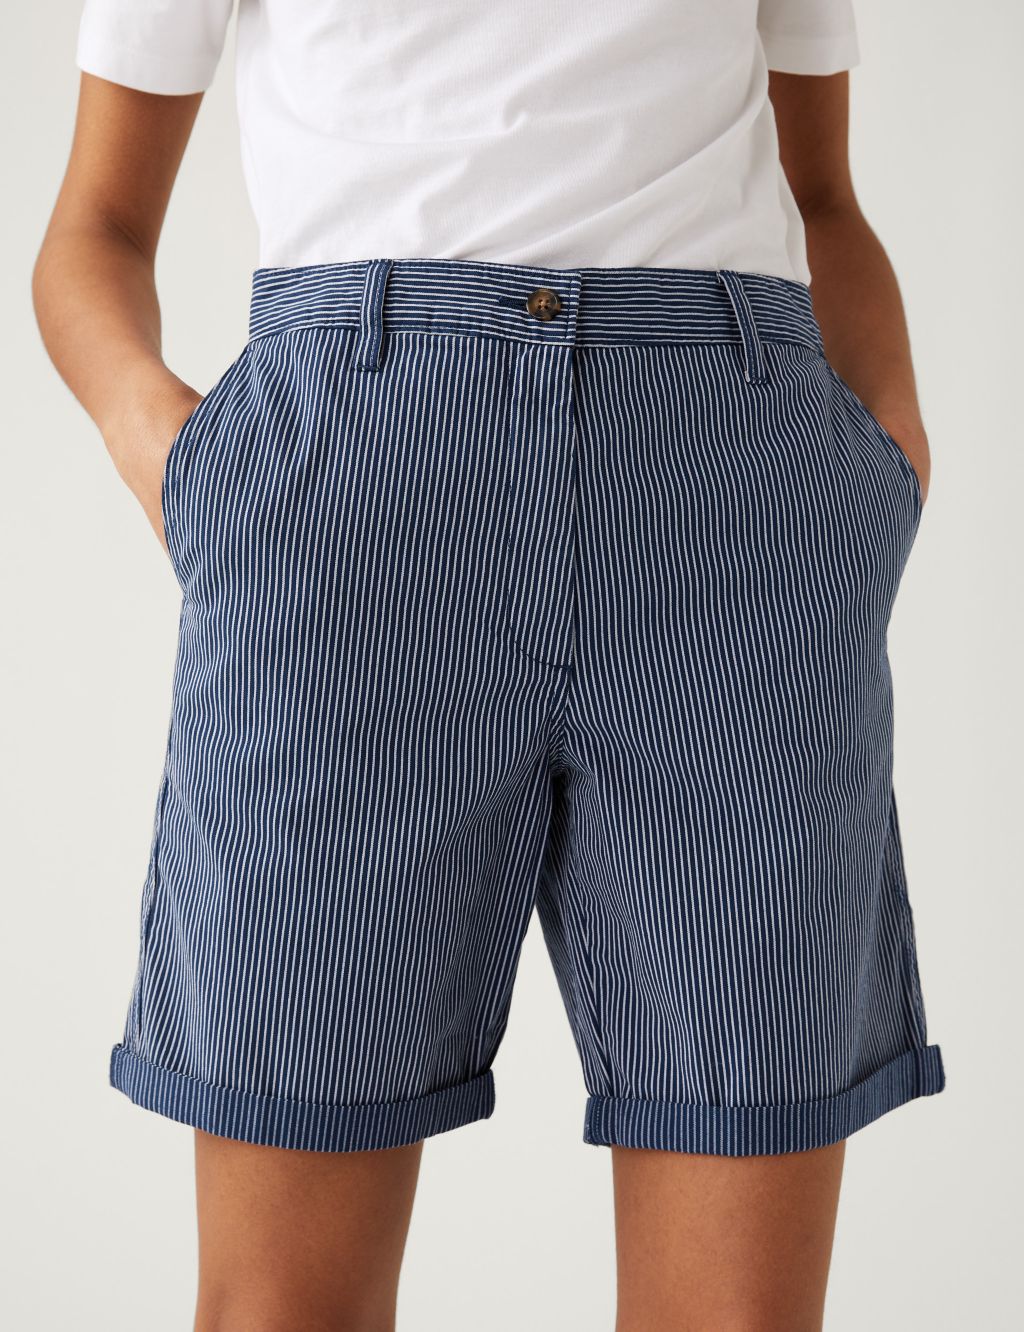 Cotton Rich Striped Chino Shorts image 3